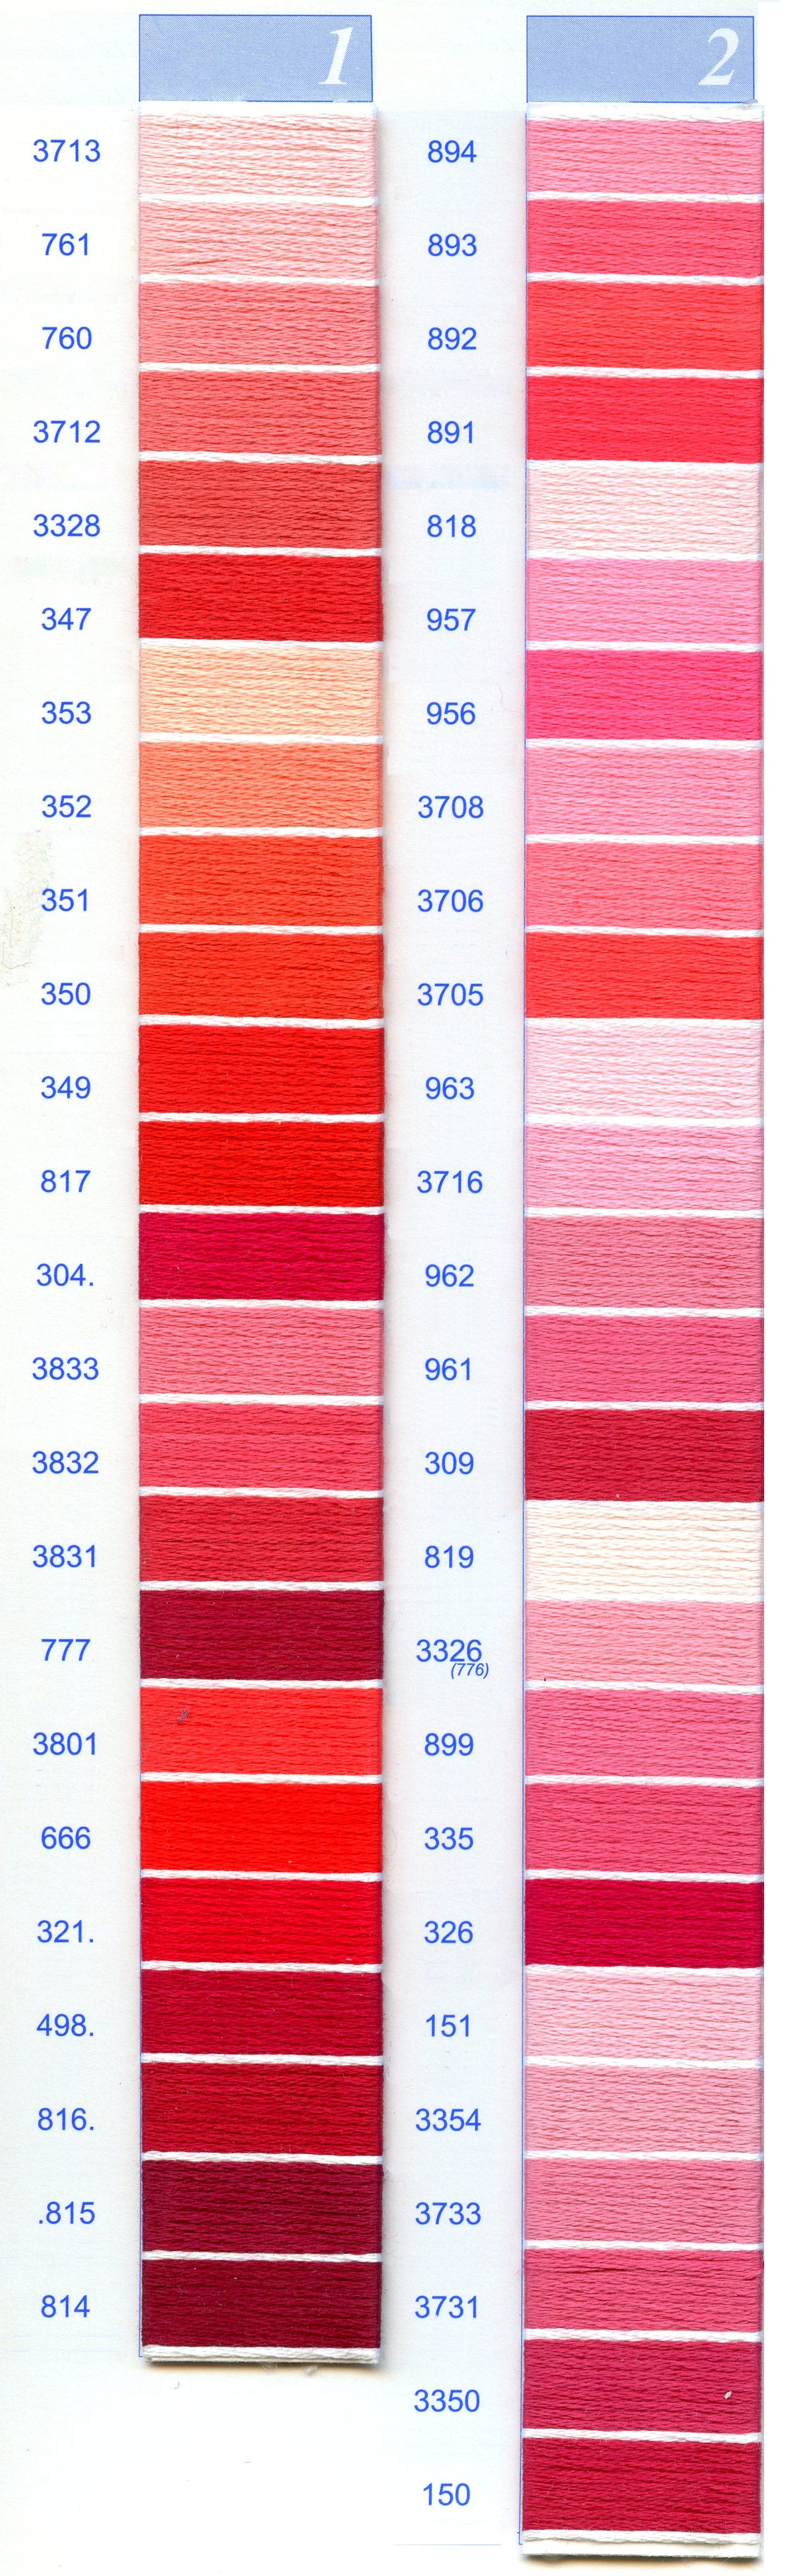 DMC Embroidery Floss Chart - Columns 1 & 2